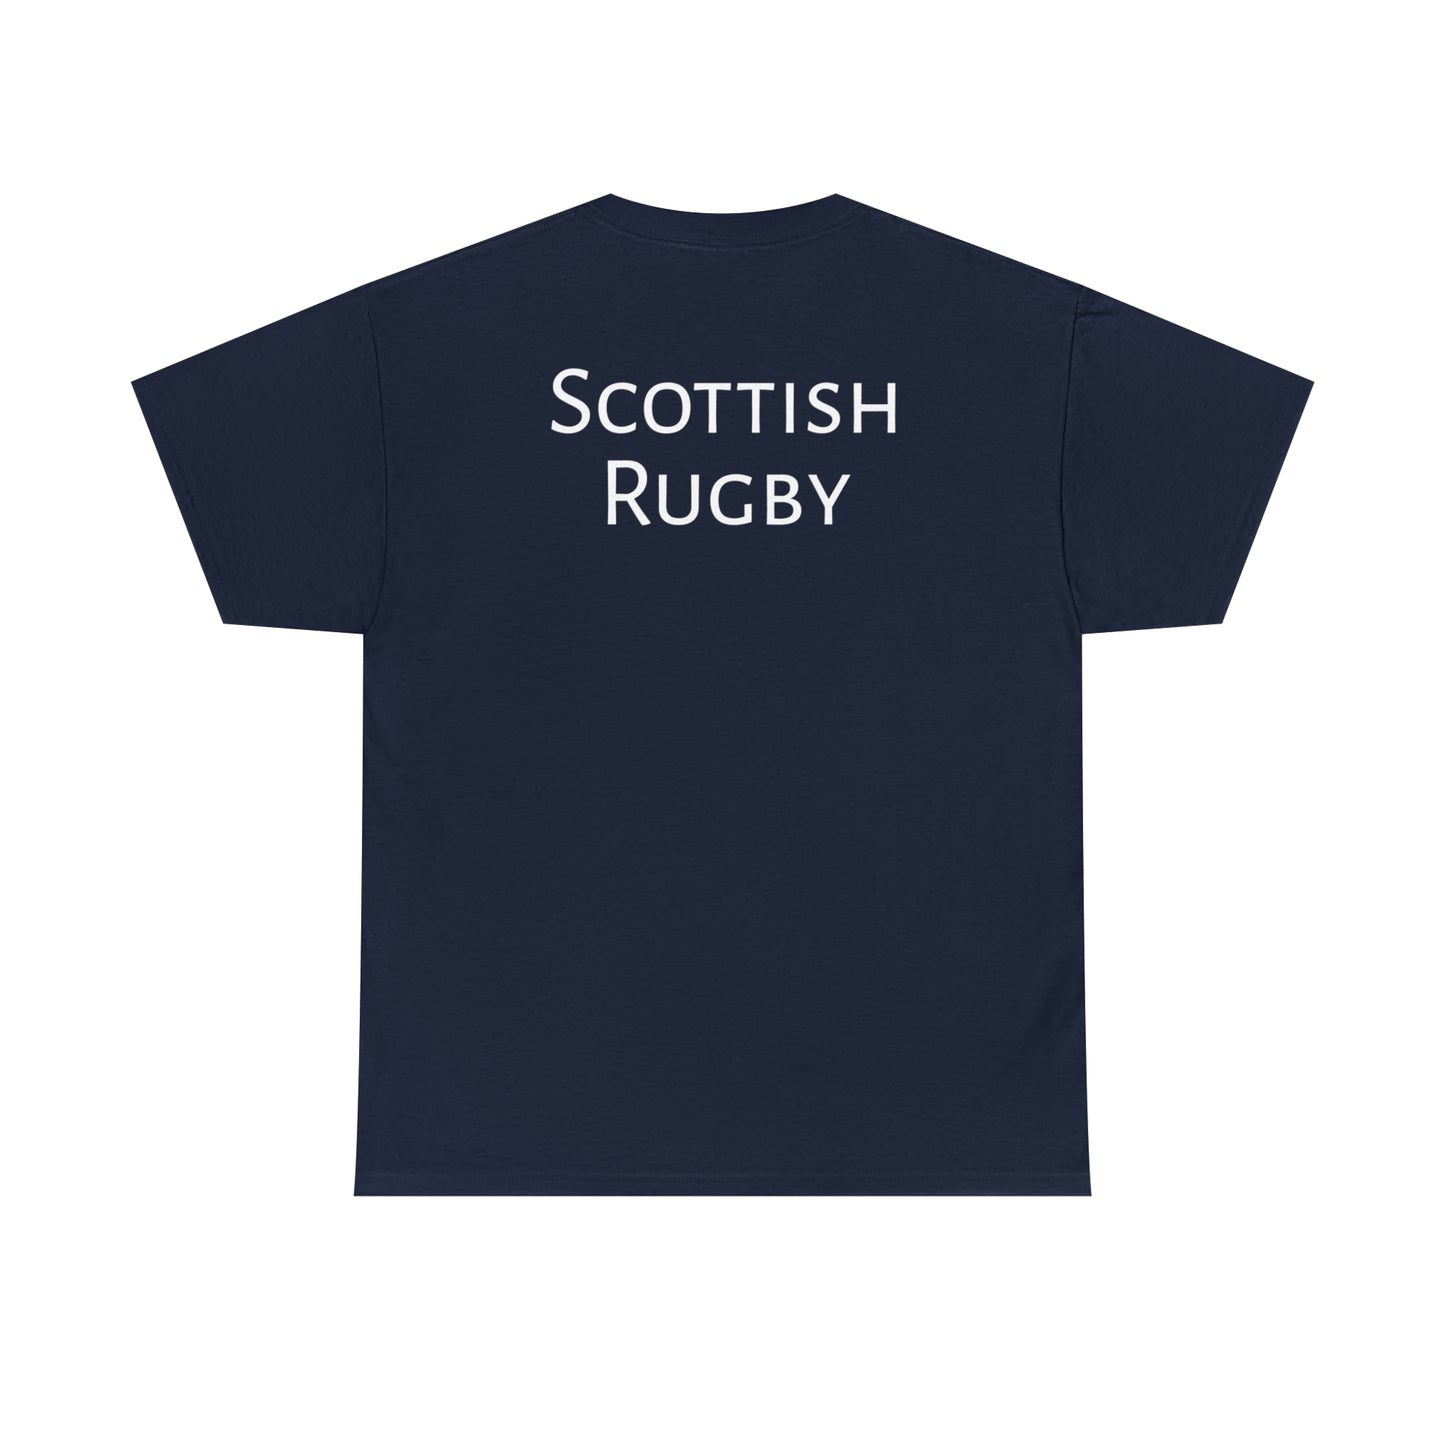 Celebrating Scotland - dark shirts